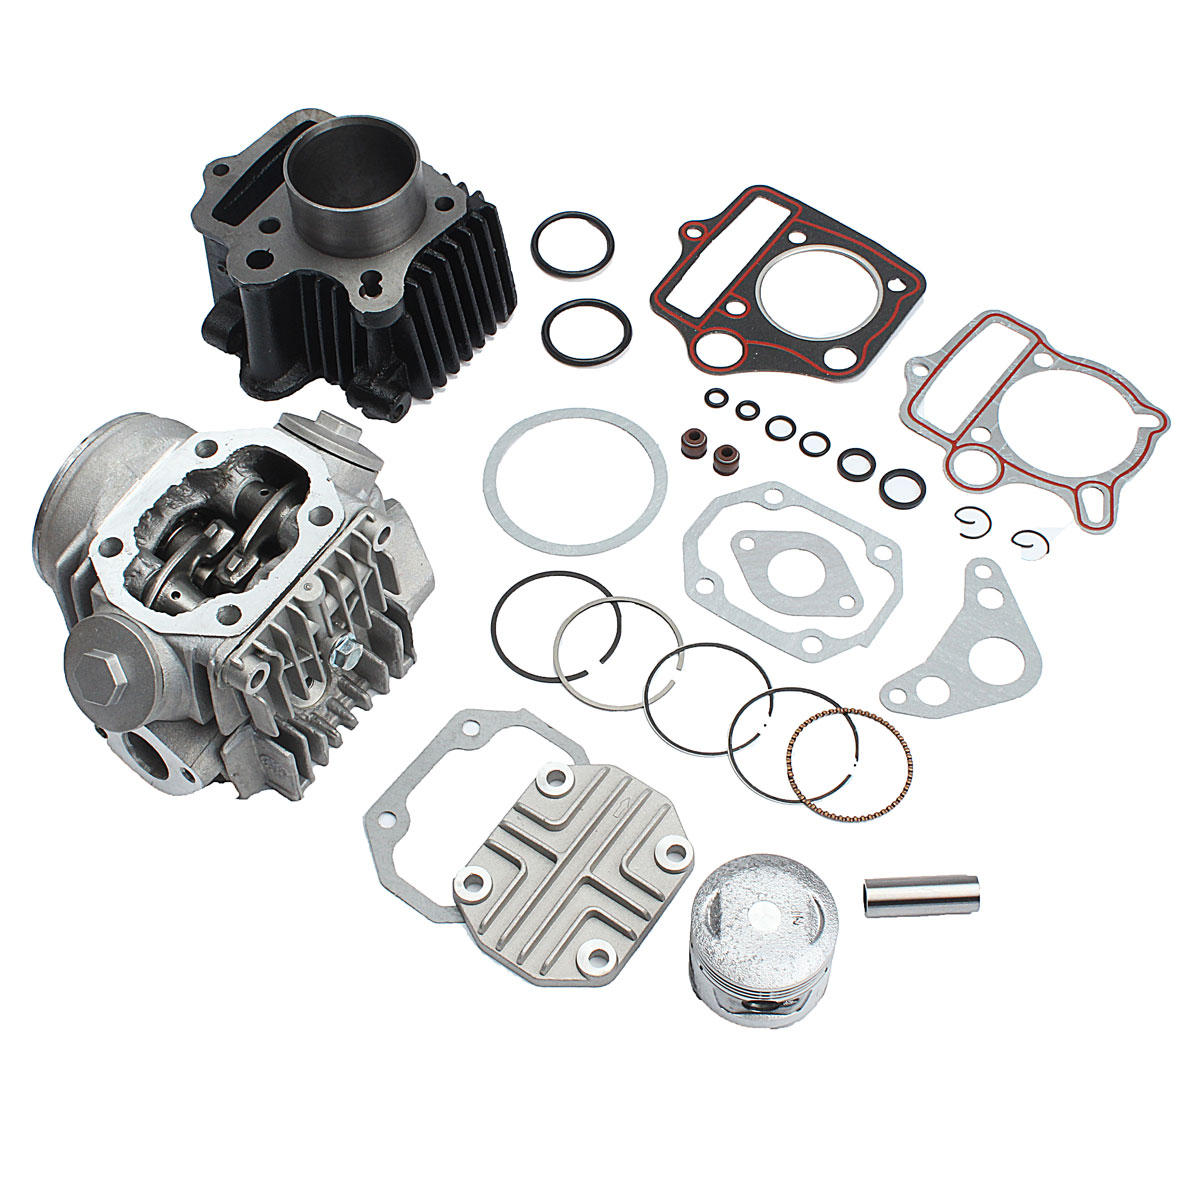 Cylinder Engine Motor Rebuild Kit For Honda ATC70 CT70 TRX70 CRF70 XR70 70cc